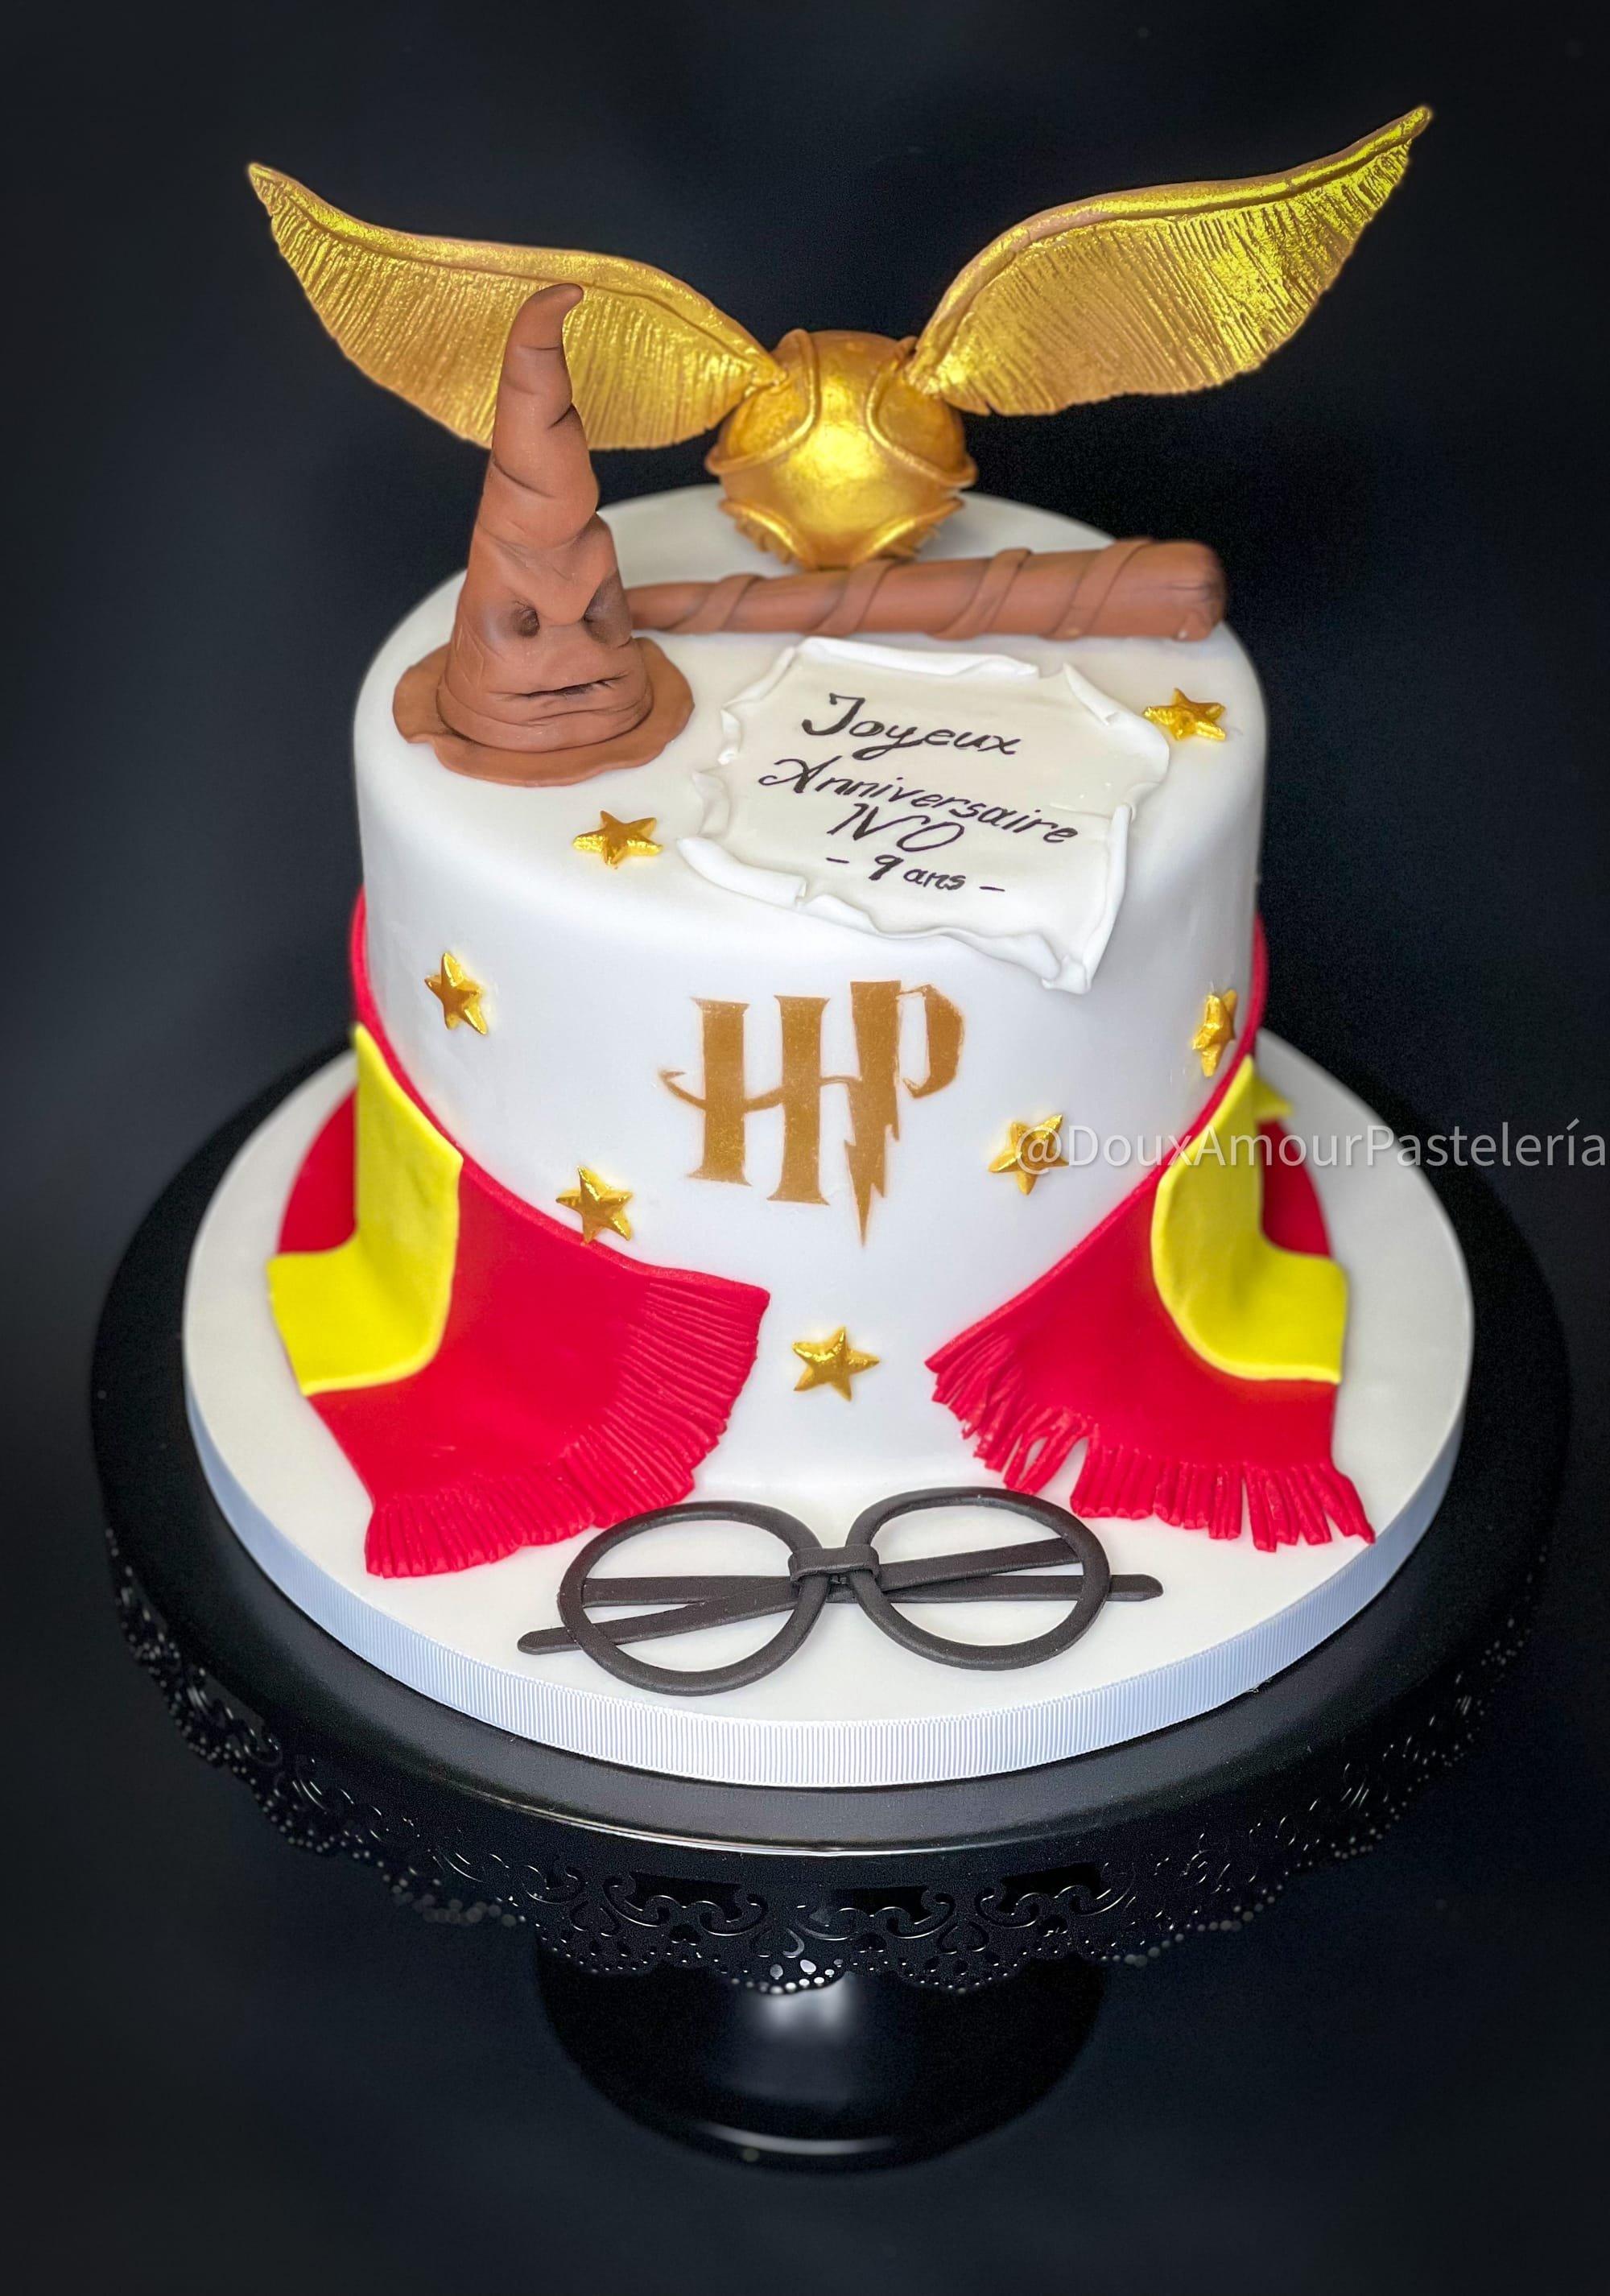 Harry Potter Golden Snitch Cake 